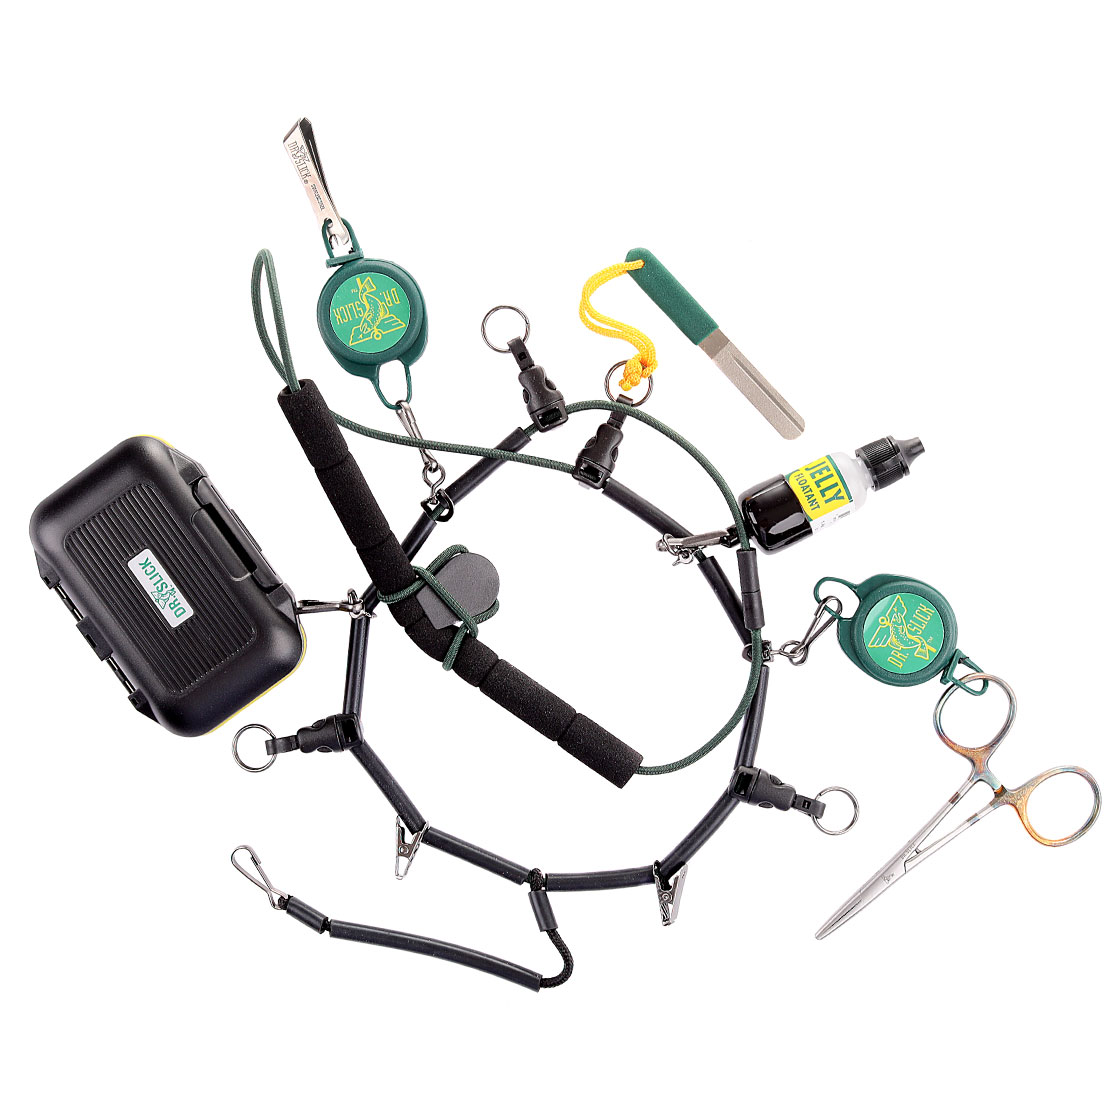 Dr. Slick Fully Loaded Necklace, Tool Holder, Holder and Dispenser, Equipment